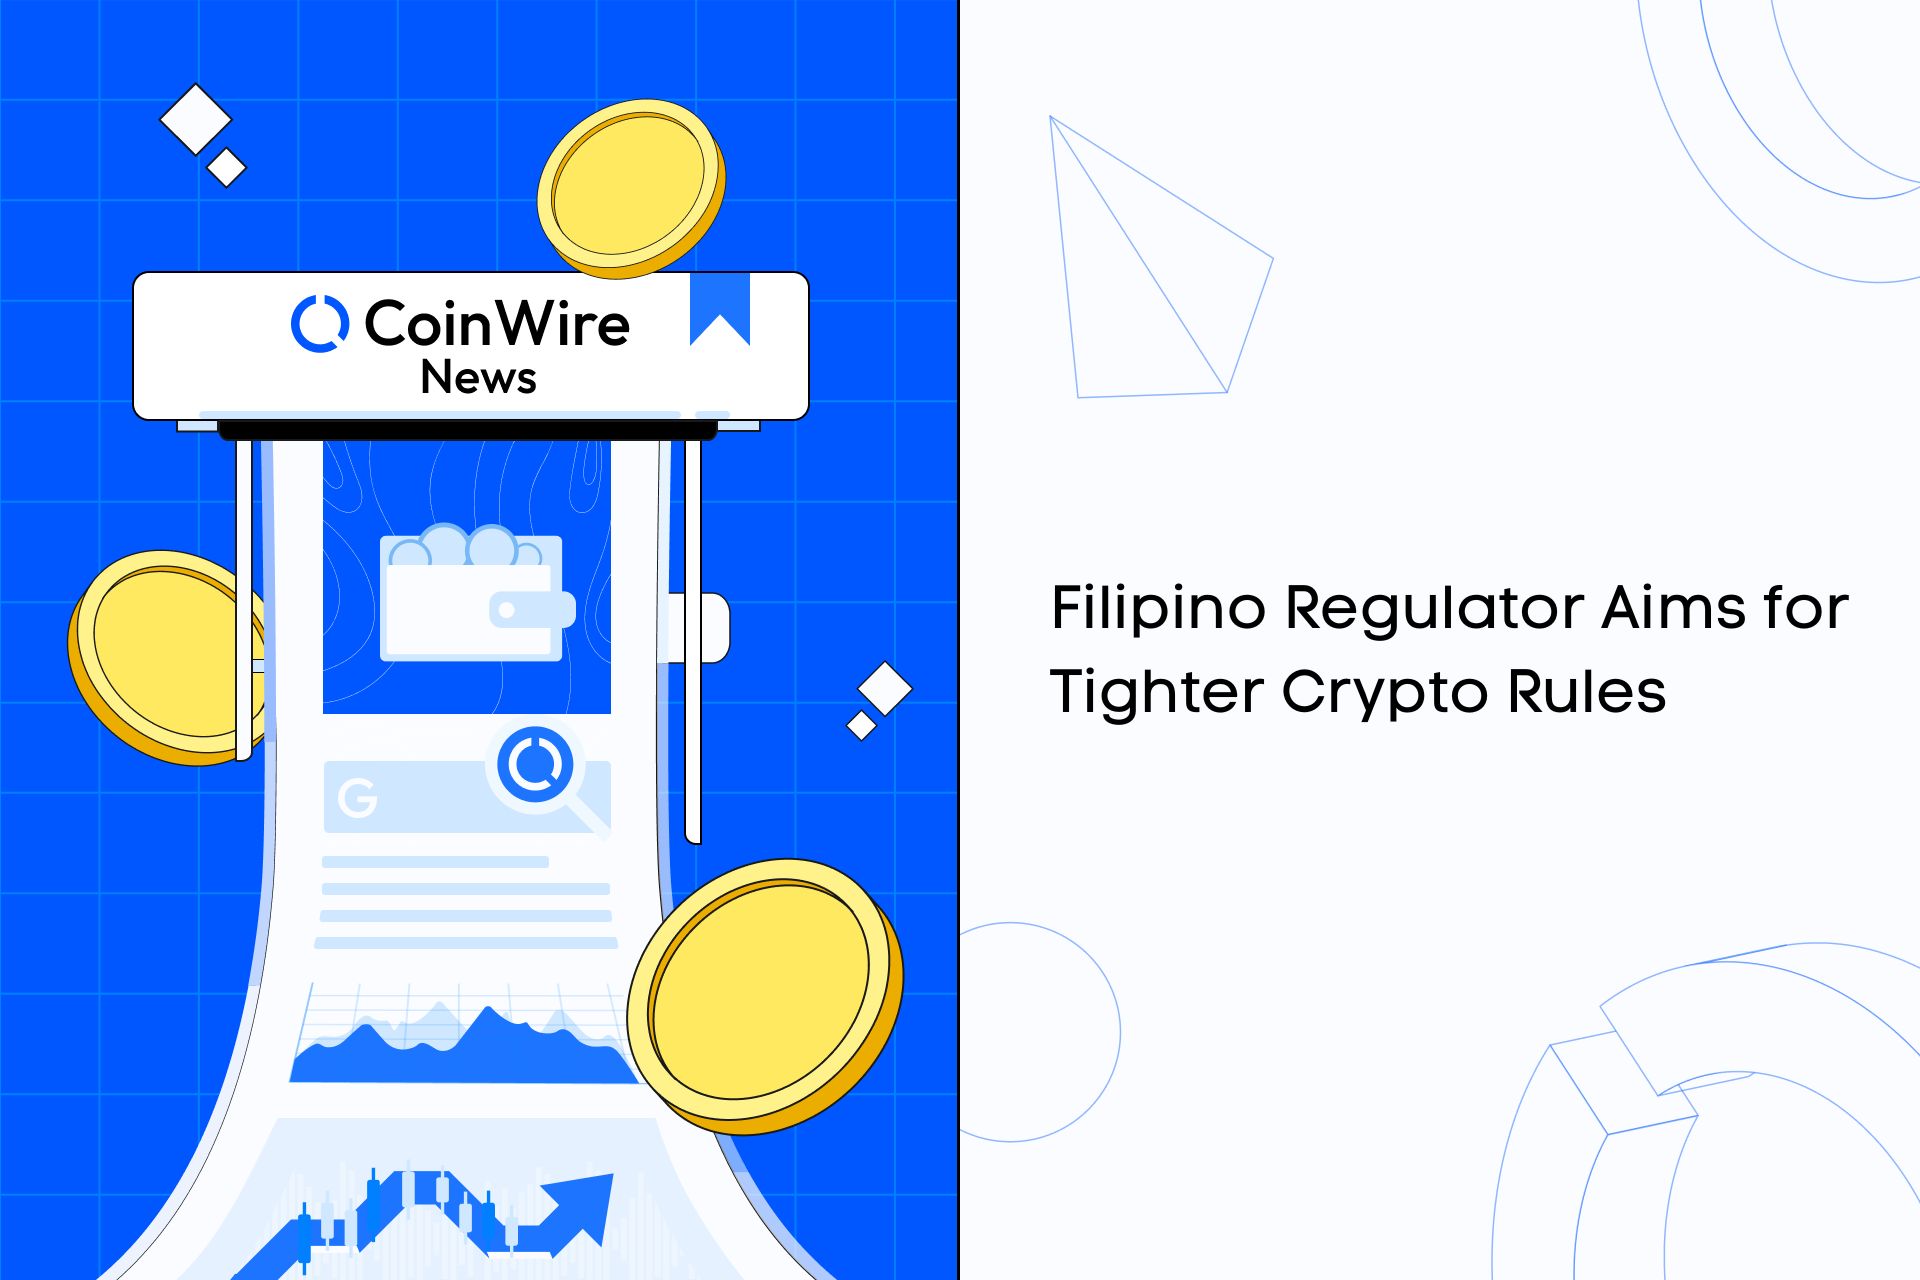 Filipino Regulator Aims For Tighter Crypto Rules